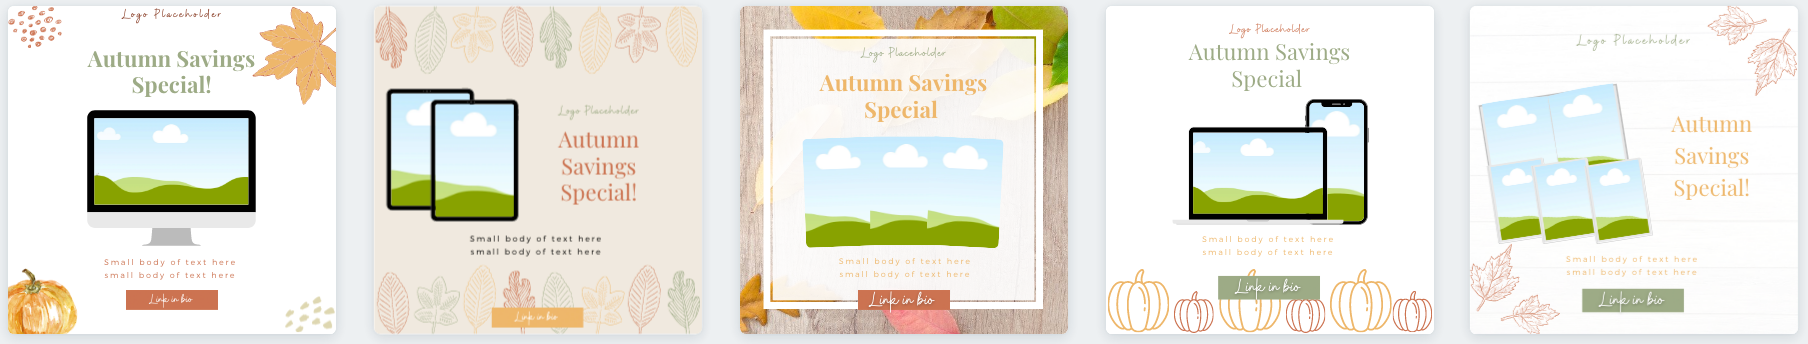 Toolbox: Seasonal Savings Special